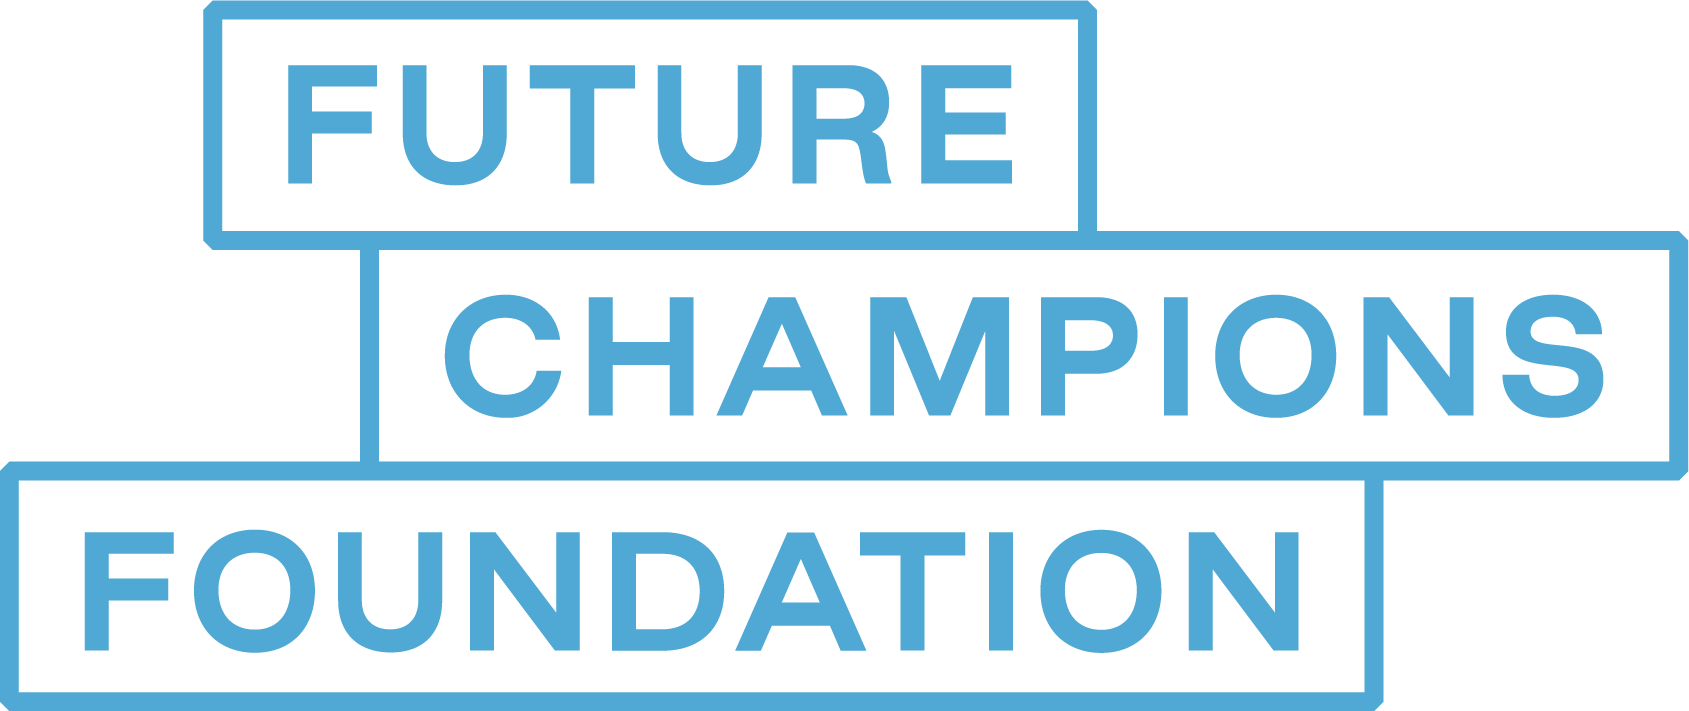 Future Champions Foundation logo